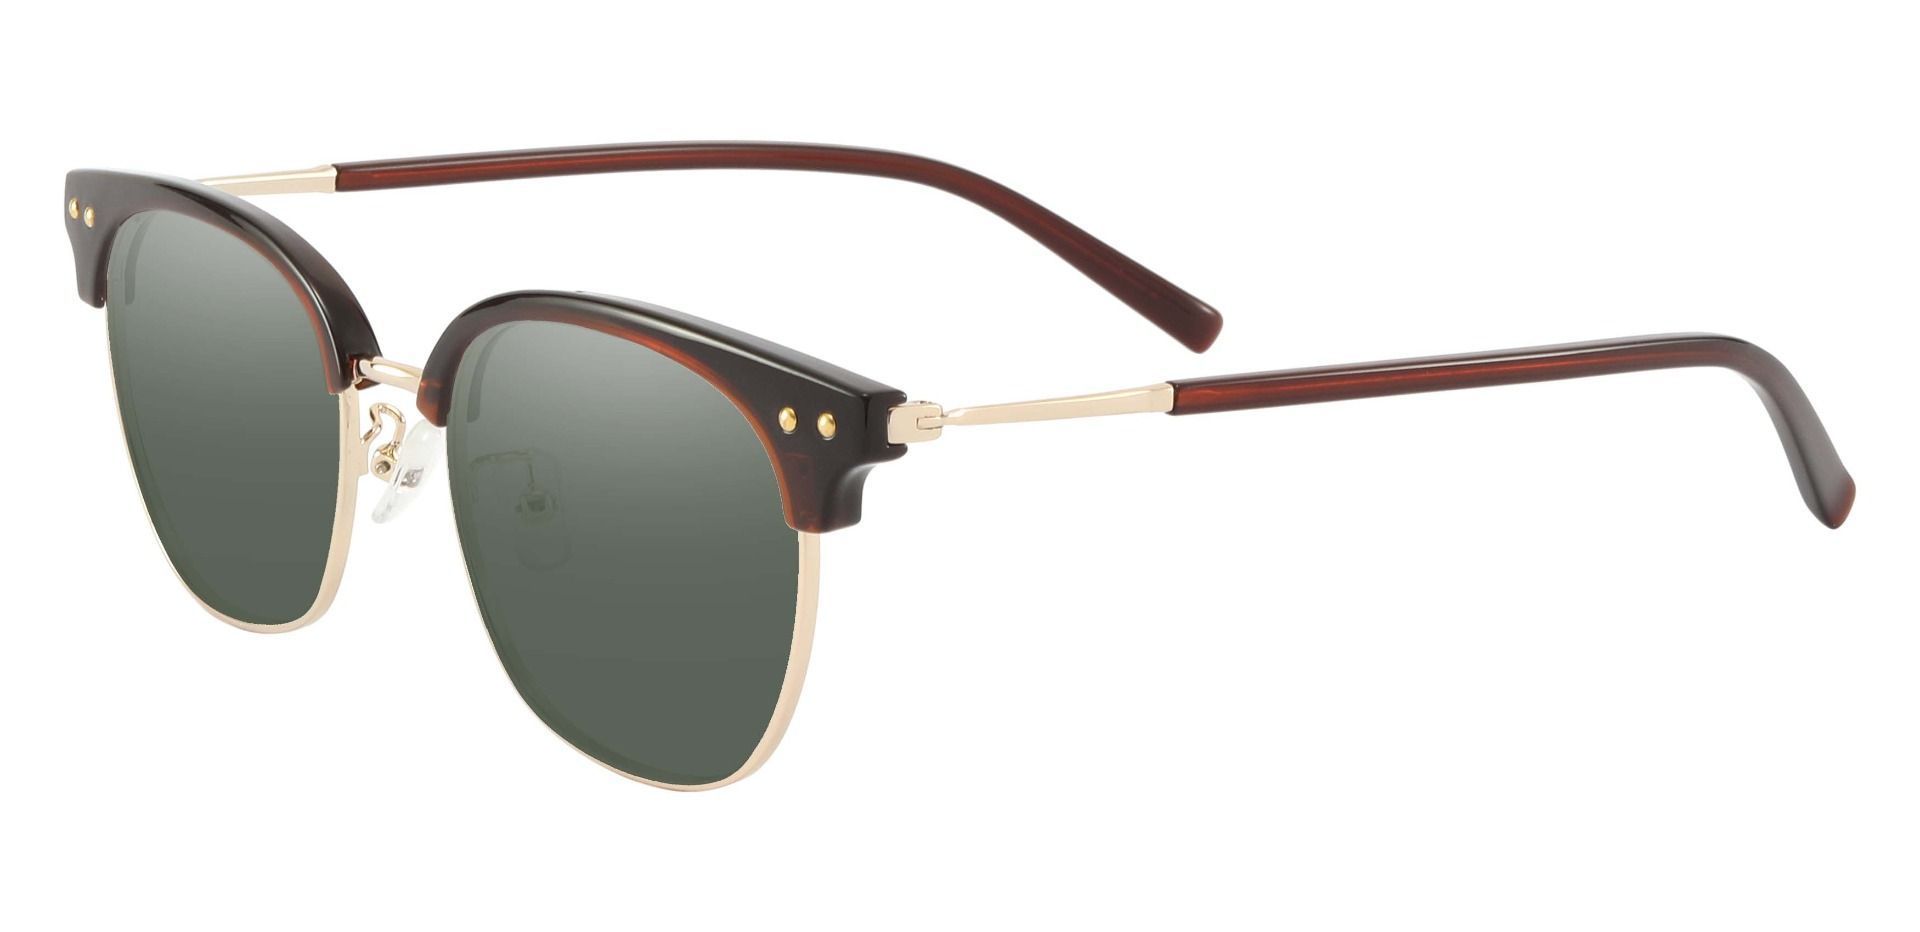 Bolivia Browline Progressive Sunglasses - Brown Frame With Green Lenses